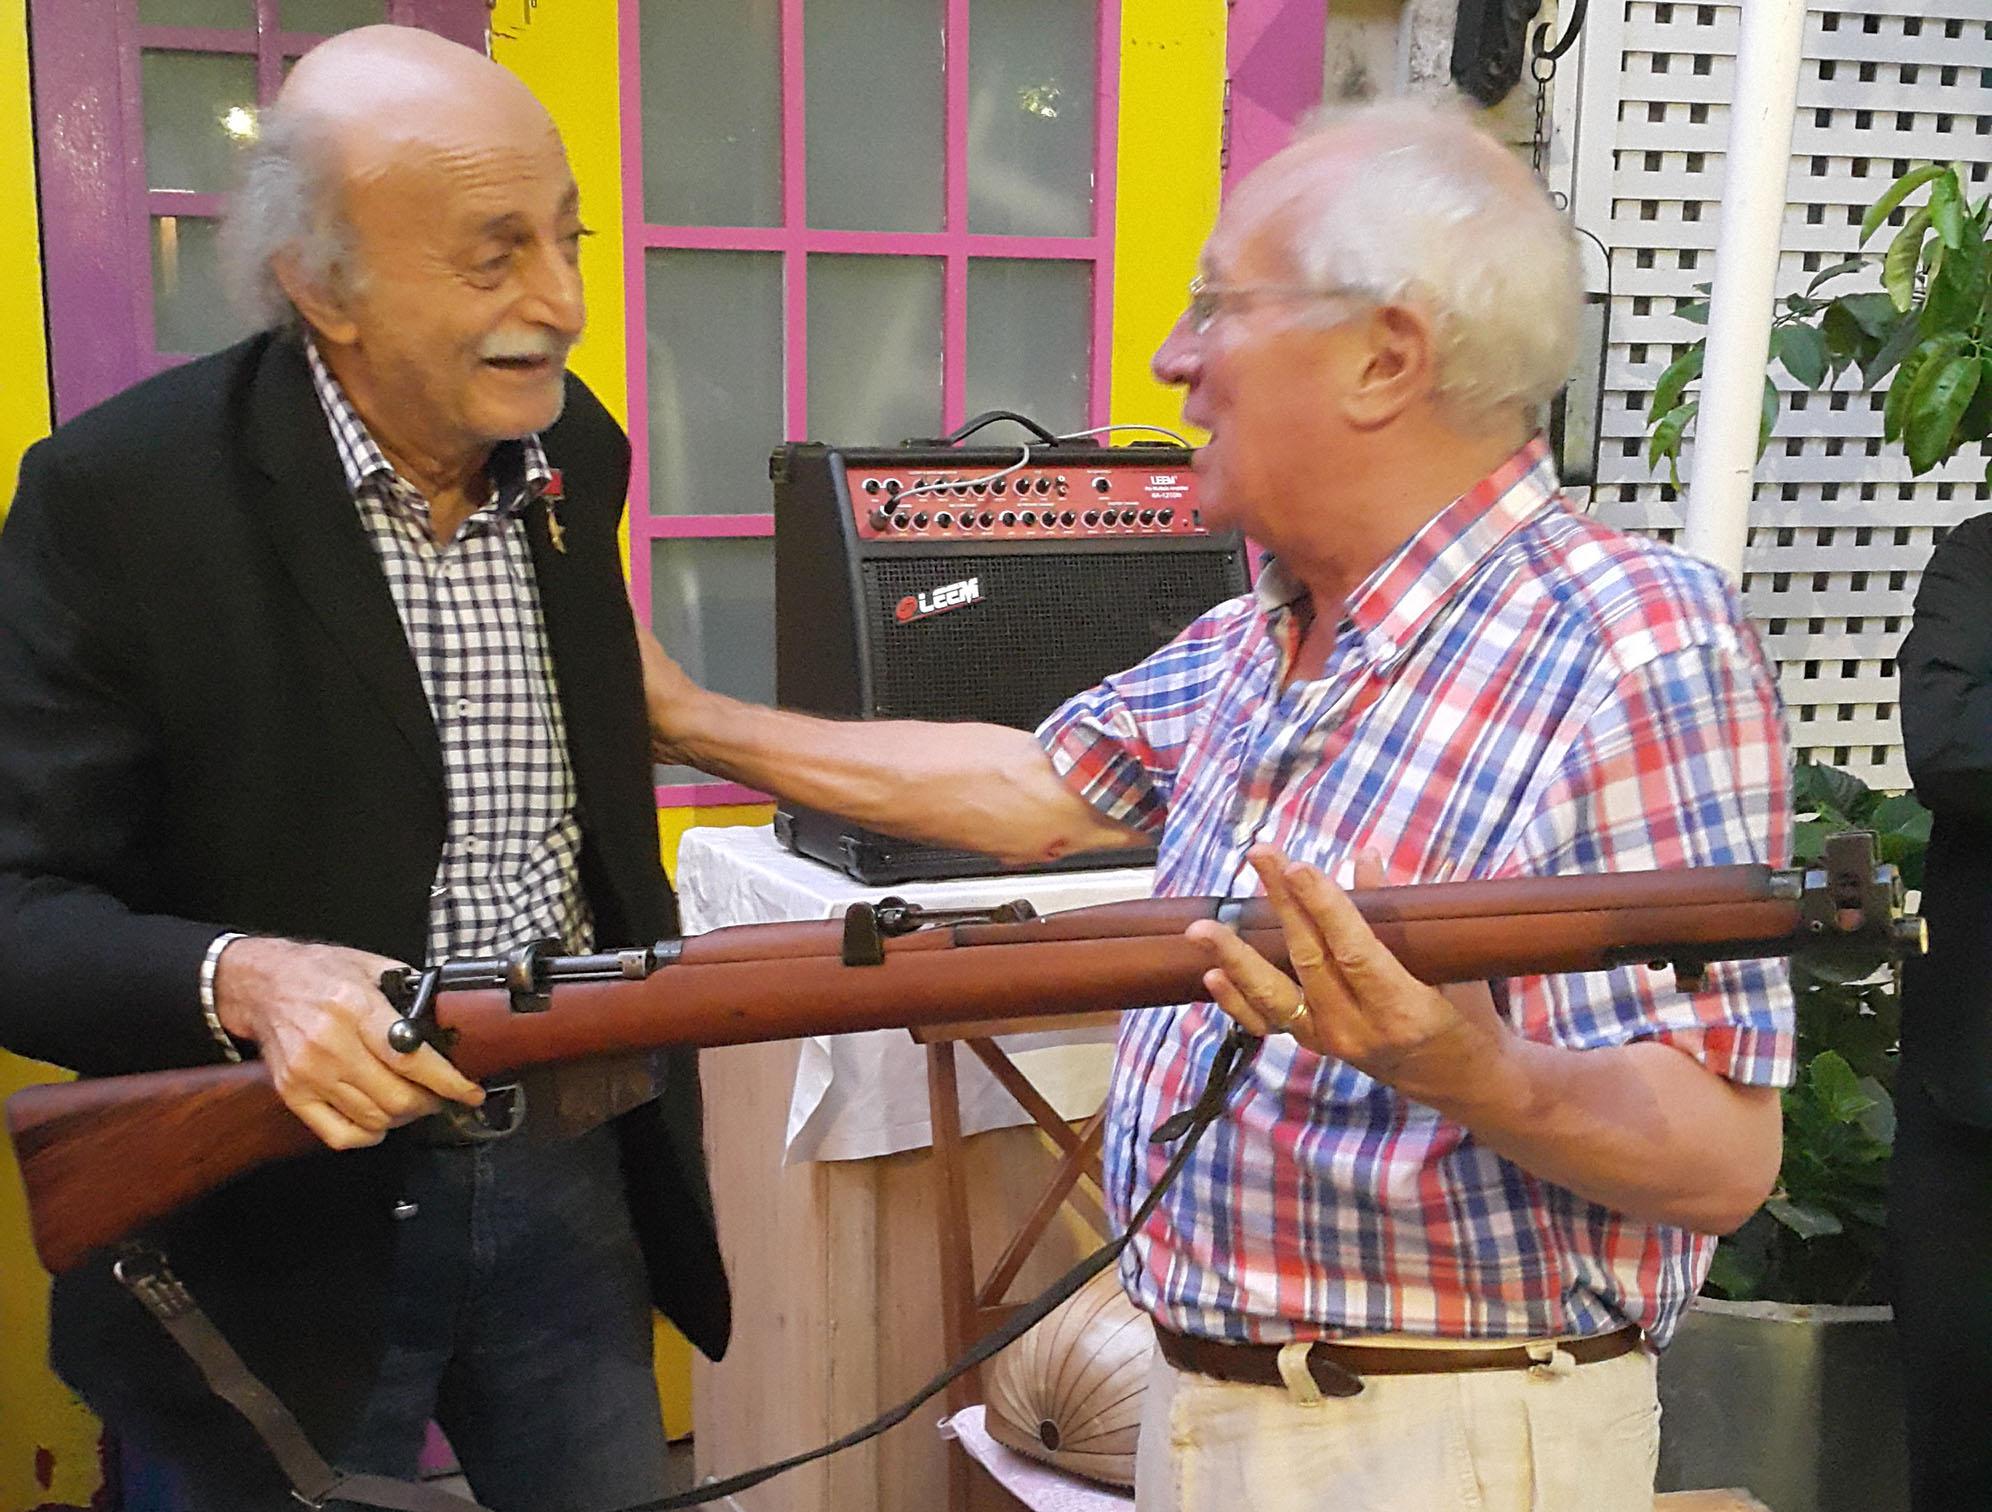 Robert Fisk receives a First World War rifle from Walid Jumblatt for his birthday